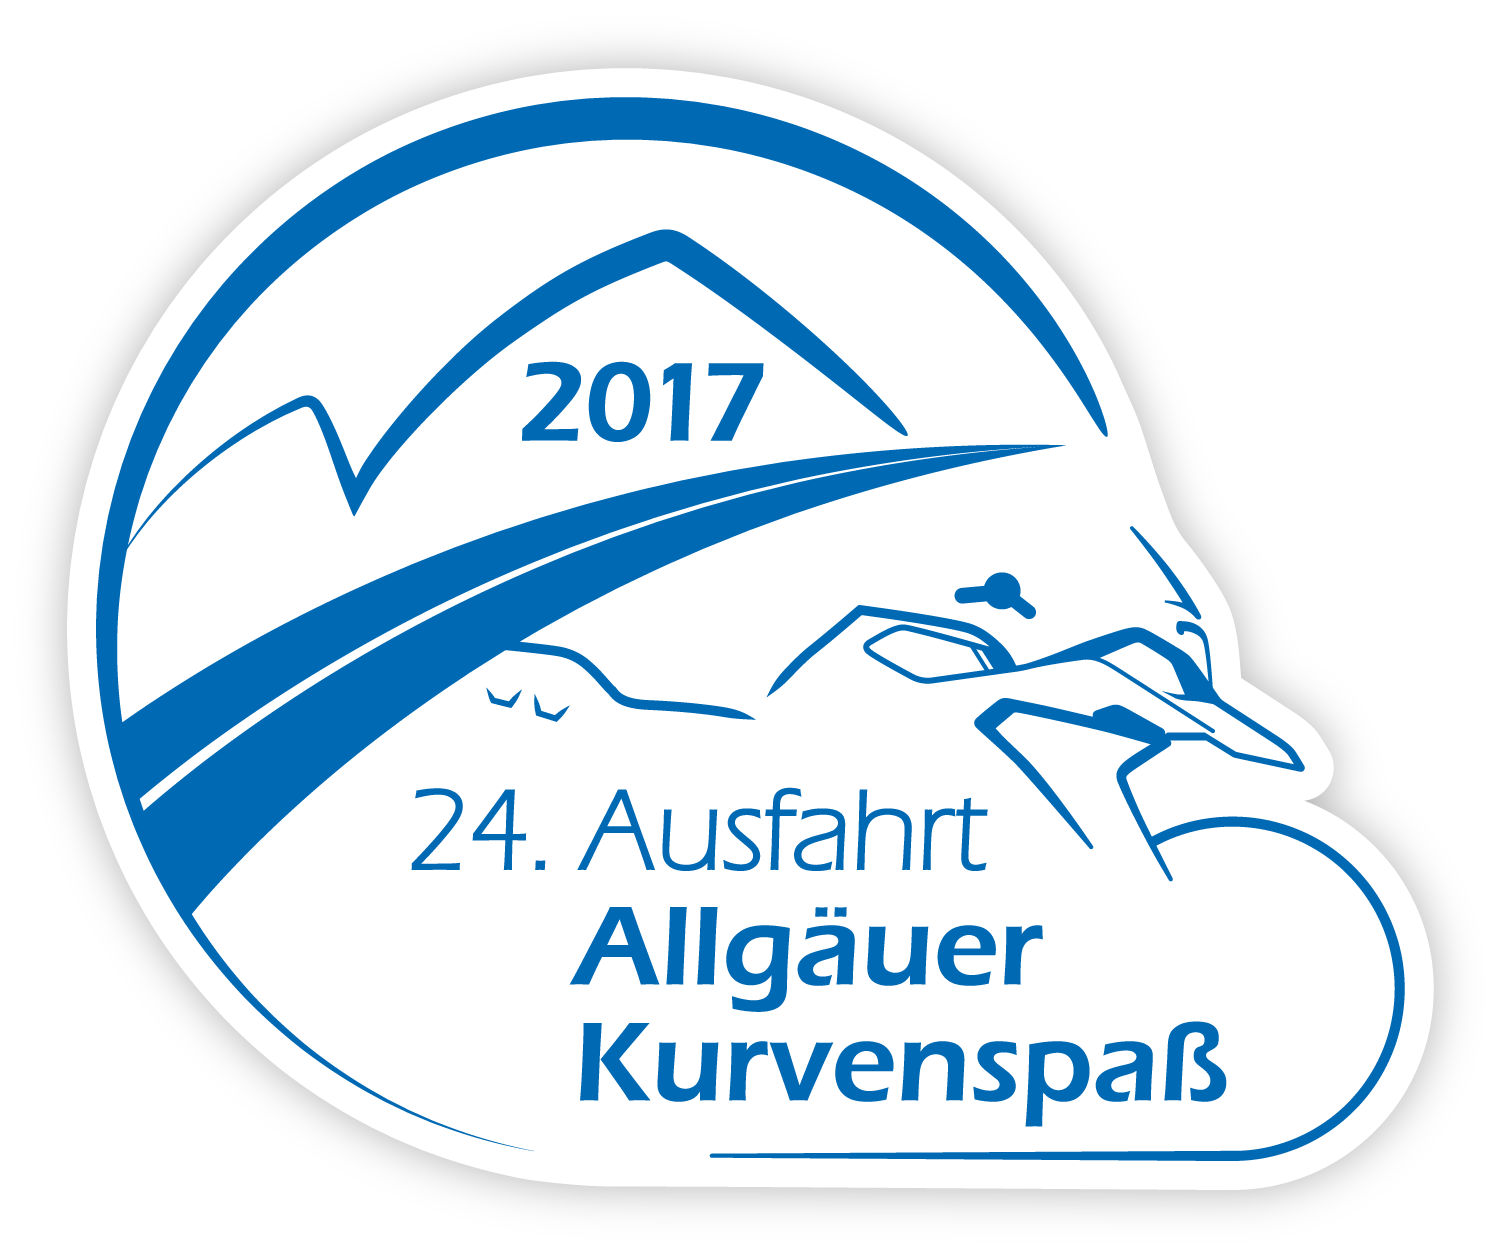 24. Hechler Ausfahrt - Allgäuer Kurvenspaß 2017